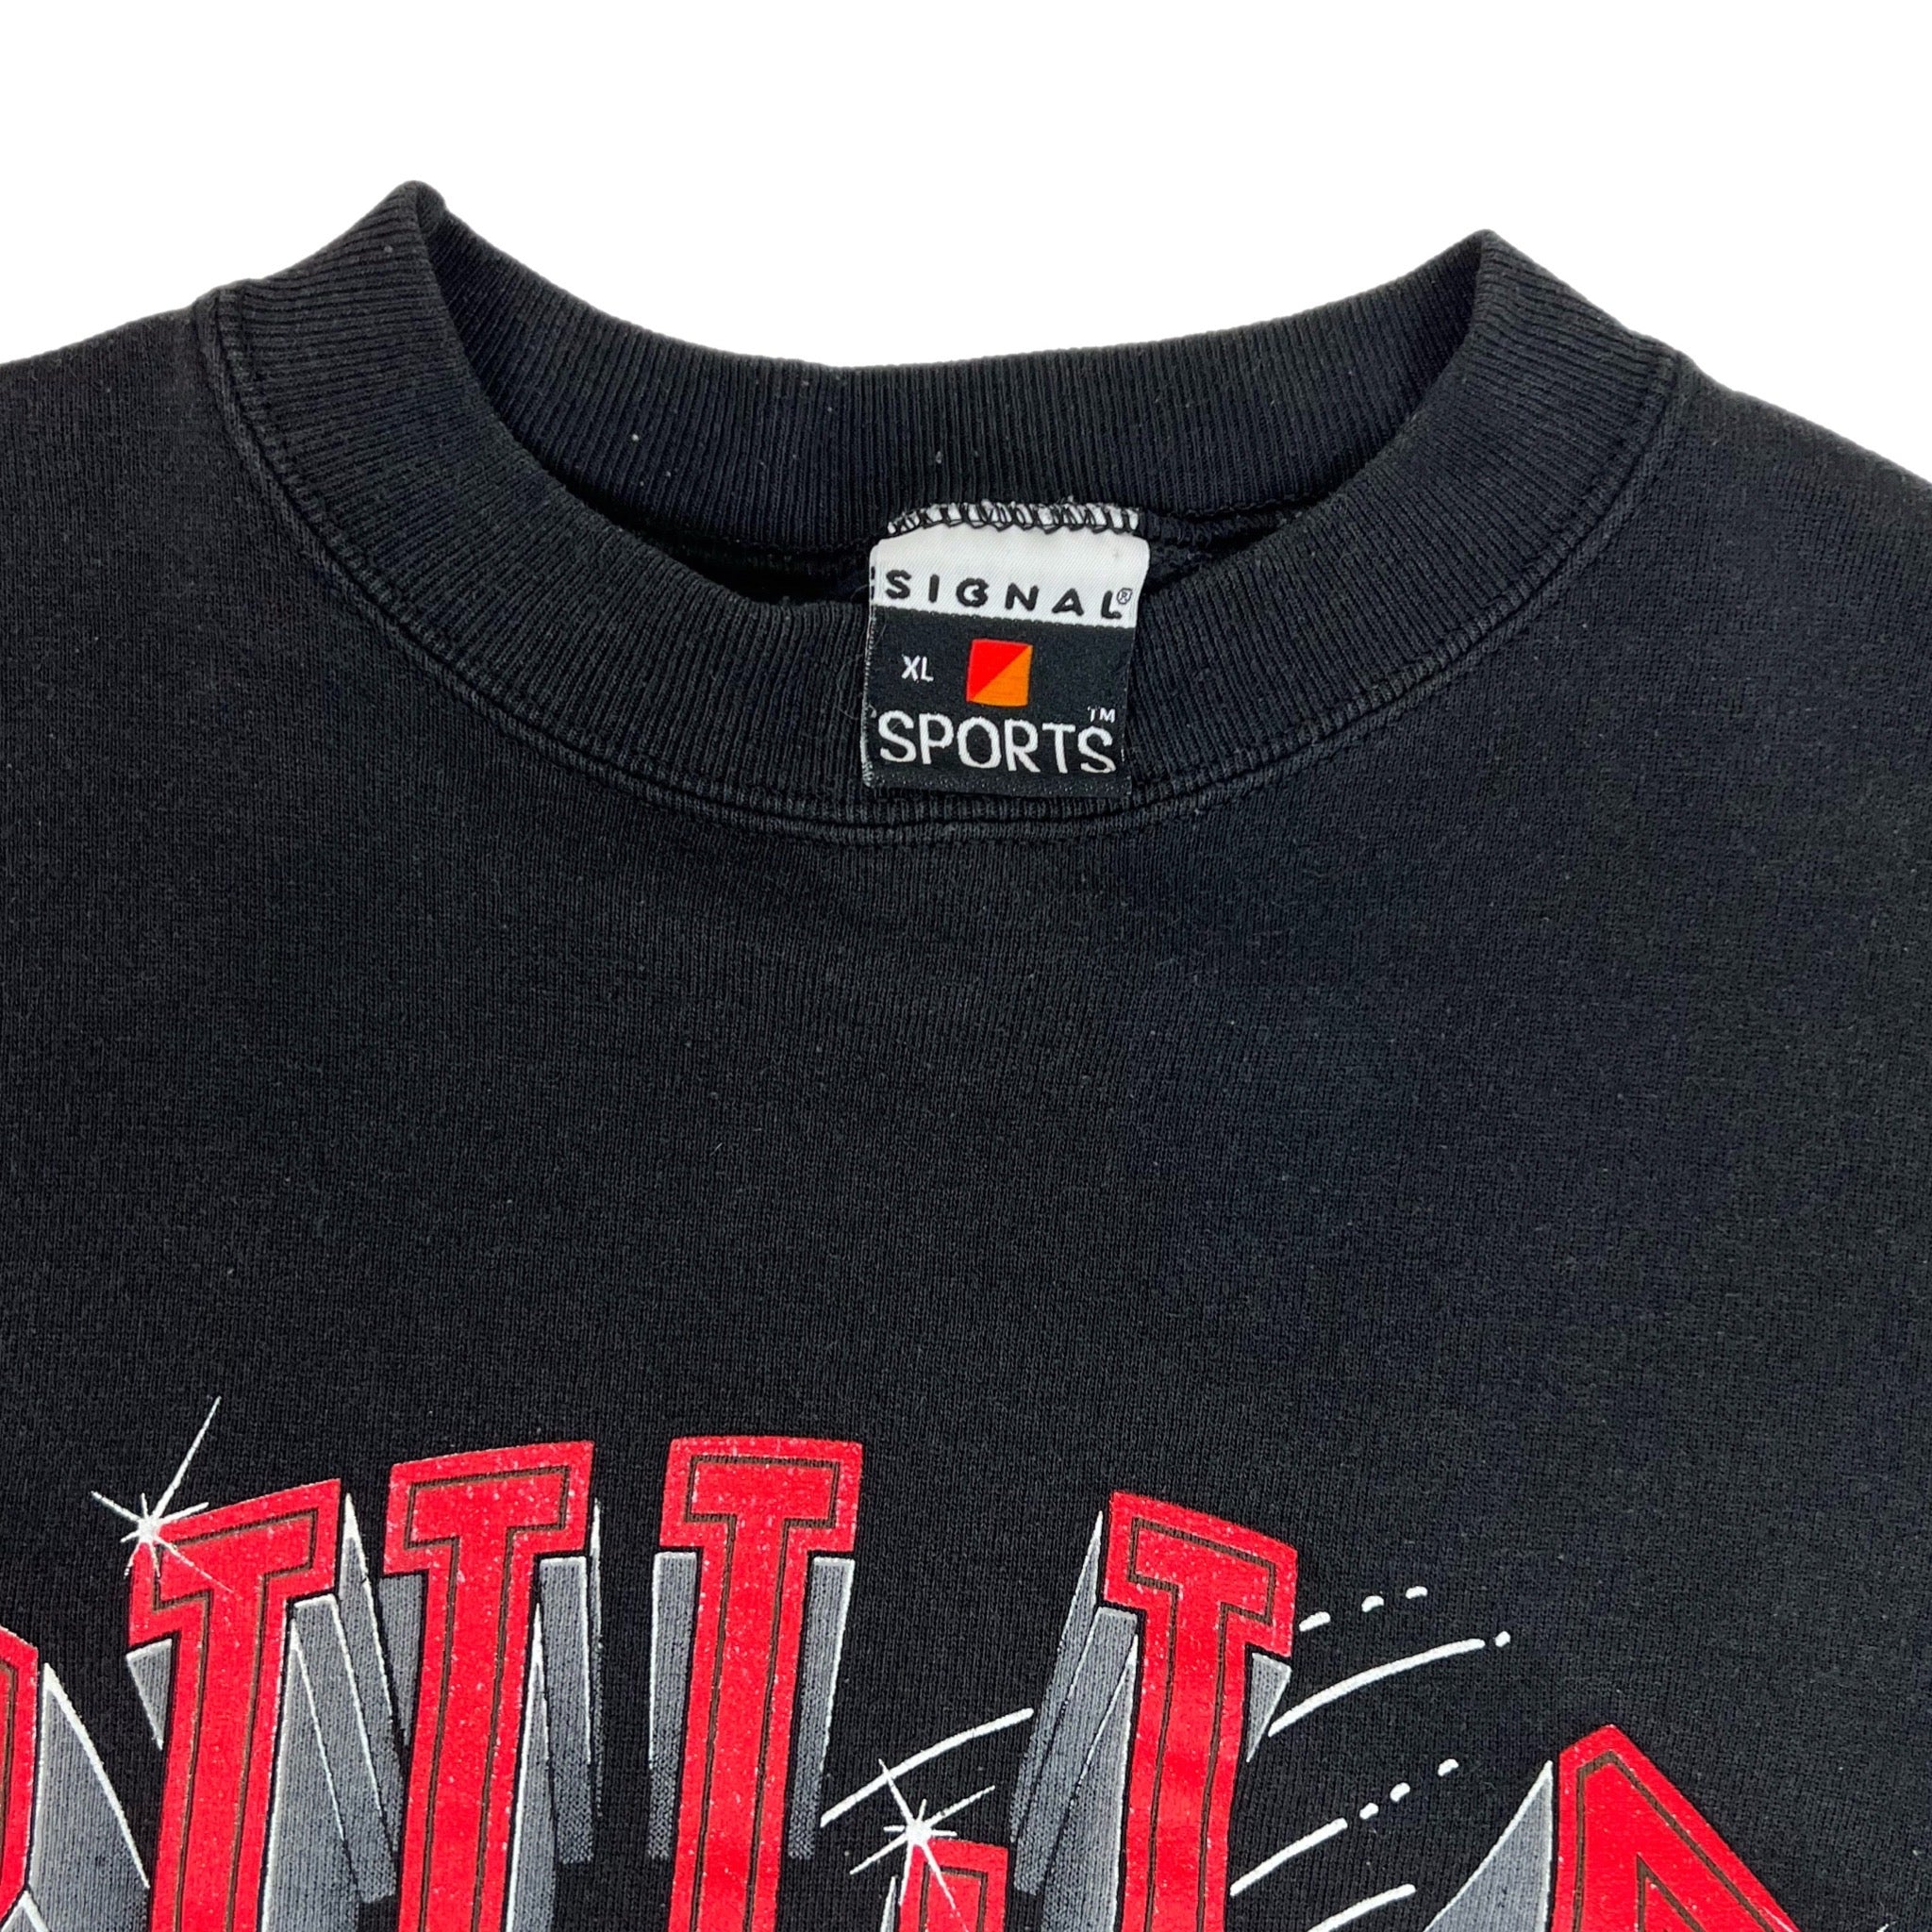 1992 Chicago Bulls Crewneck - Black Vintage Sweatshirt